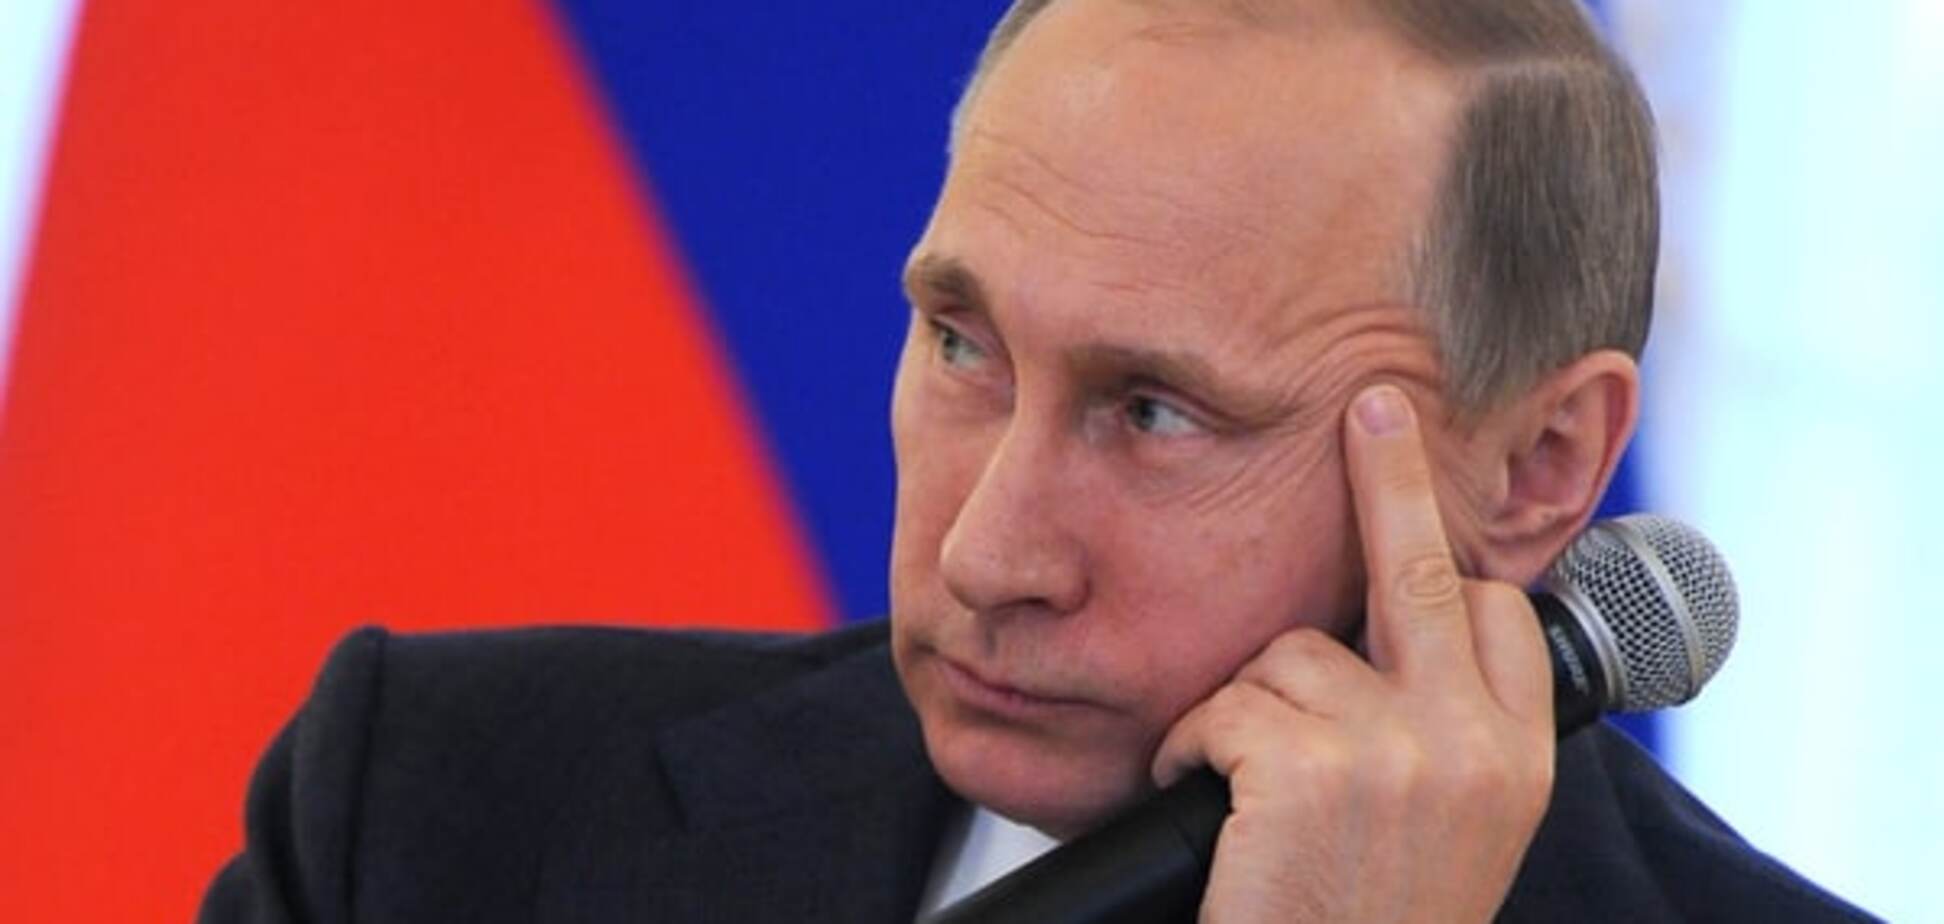 Путин проиграл в Украине, повысил ставку в Сирии и снова проиграет - Пионтковский